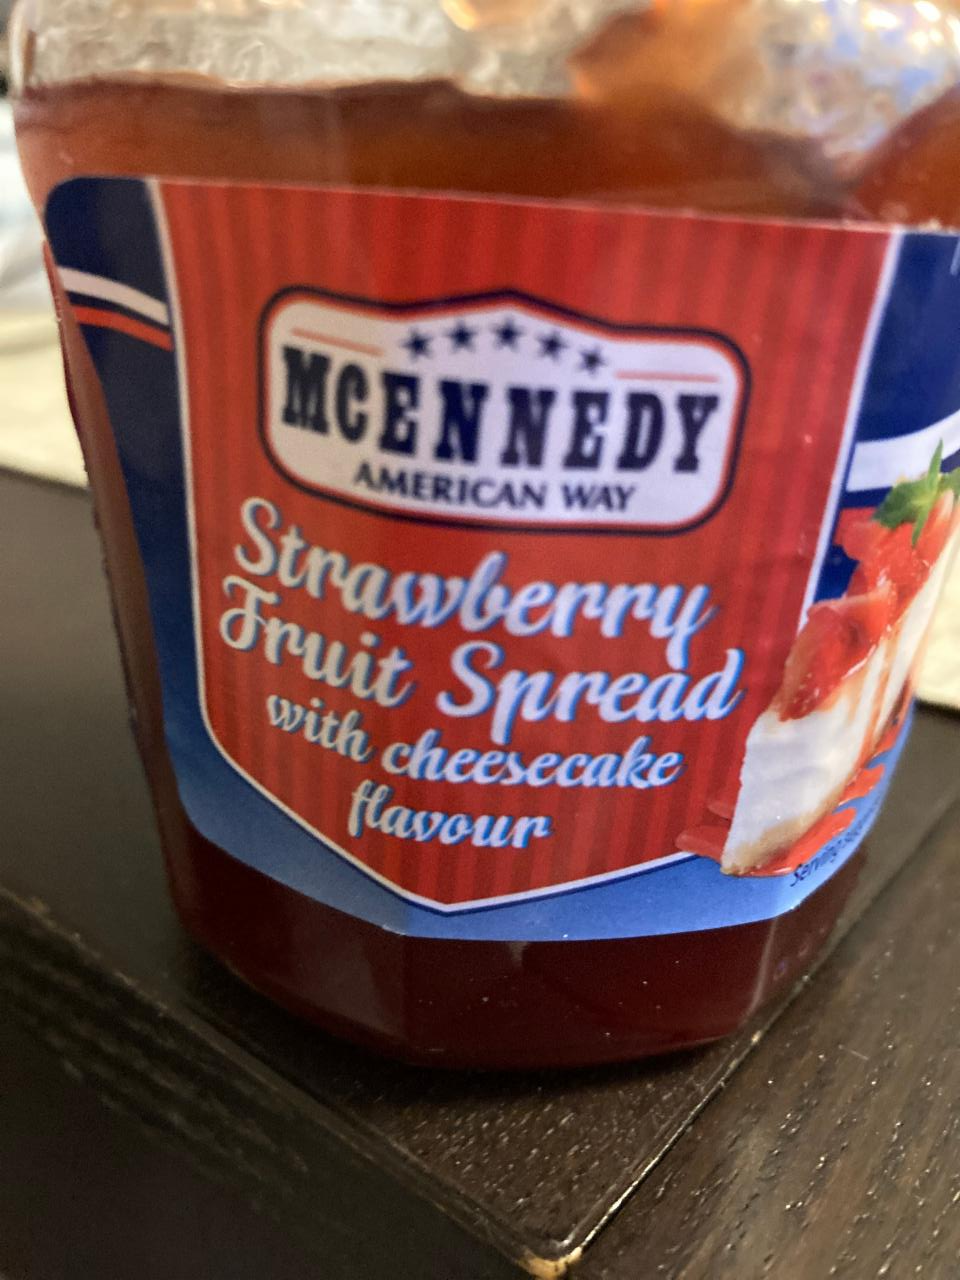 Fotografie - McEnnedy Strawberry fruit spread with cheesacake flavour